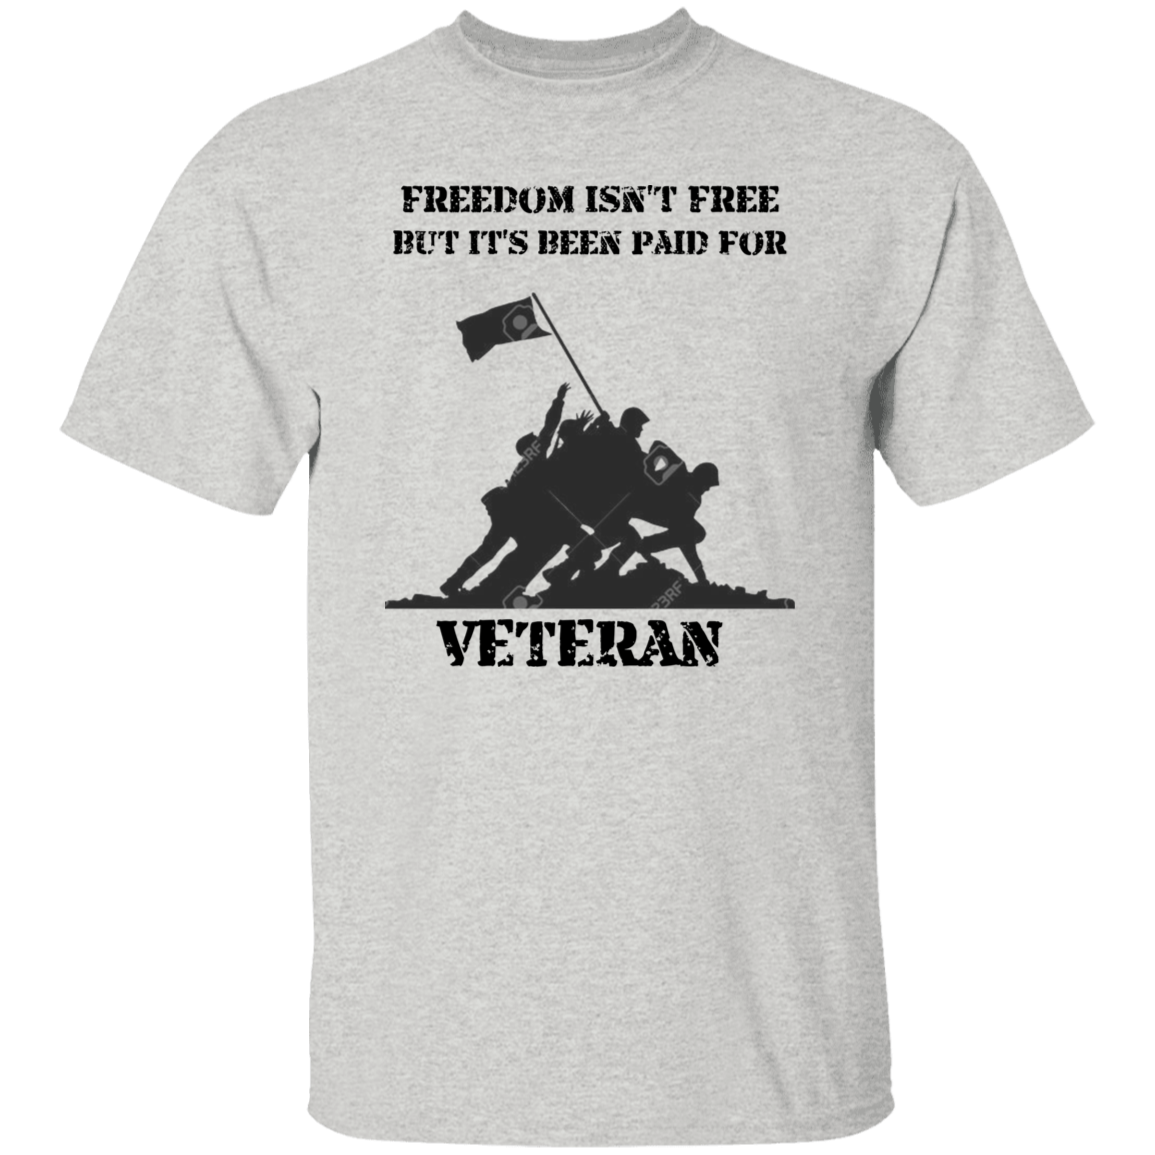 FREEDOM ISN'T FREE 5.3 oz. T-Shirt